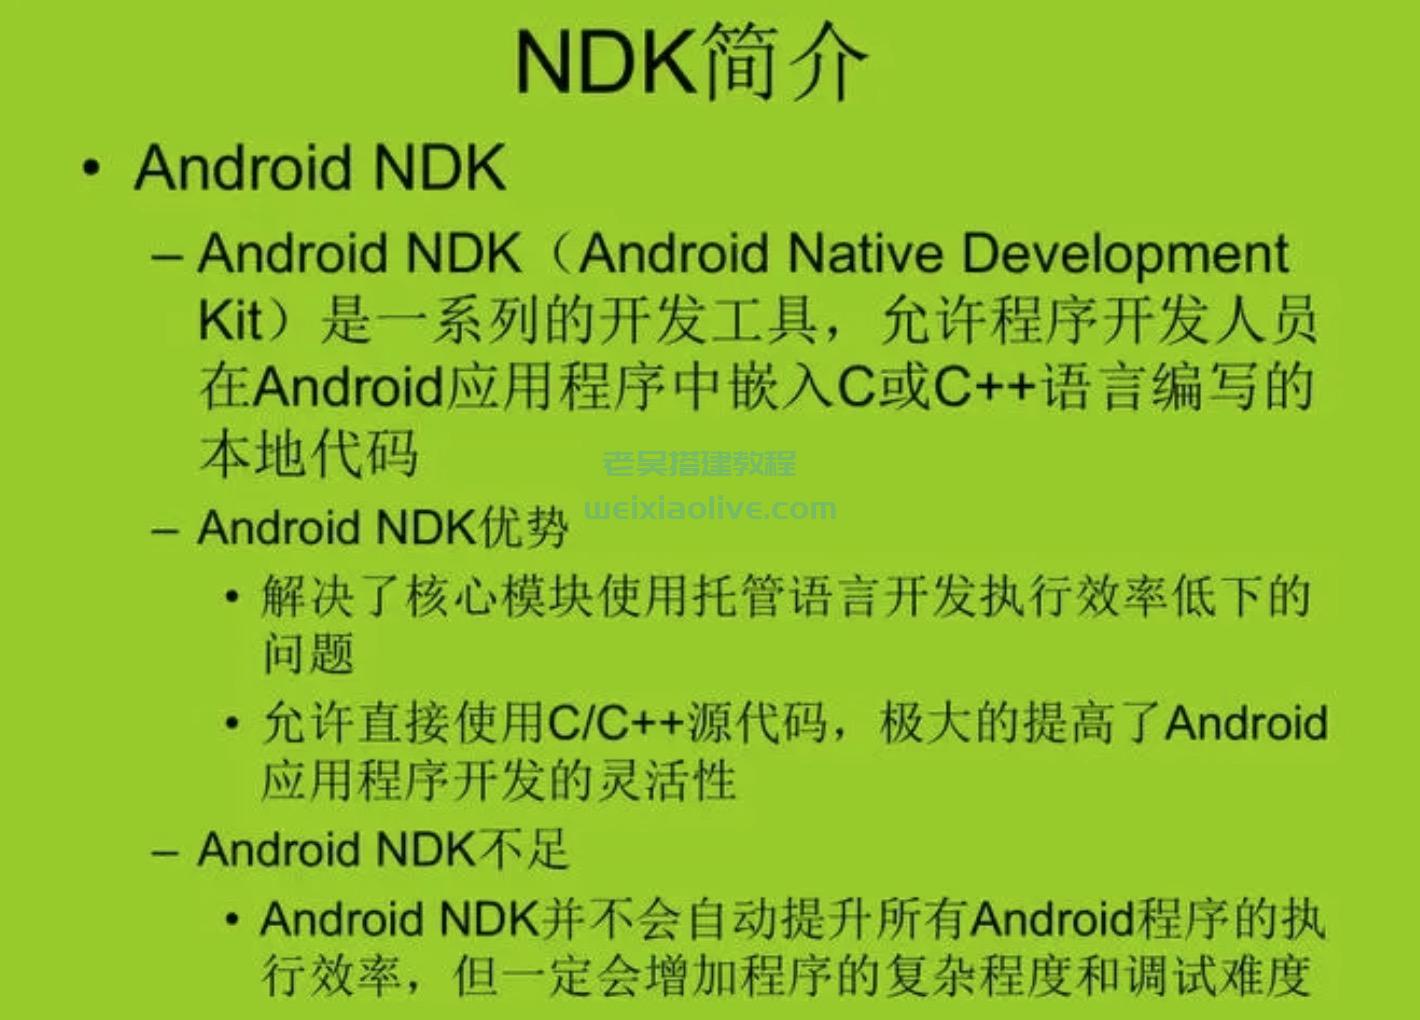 Android NDK 各版本下载地址大全  第1张